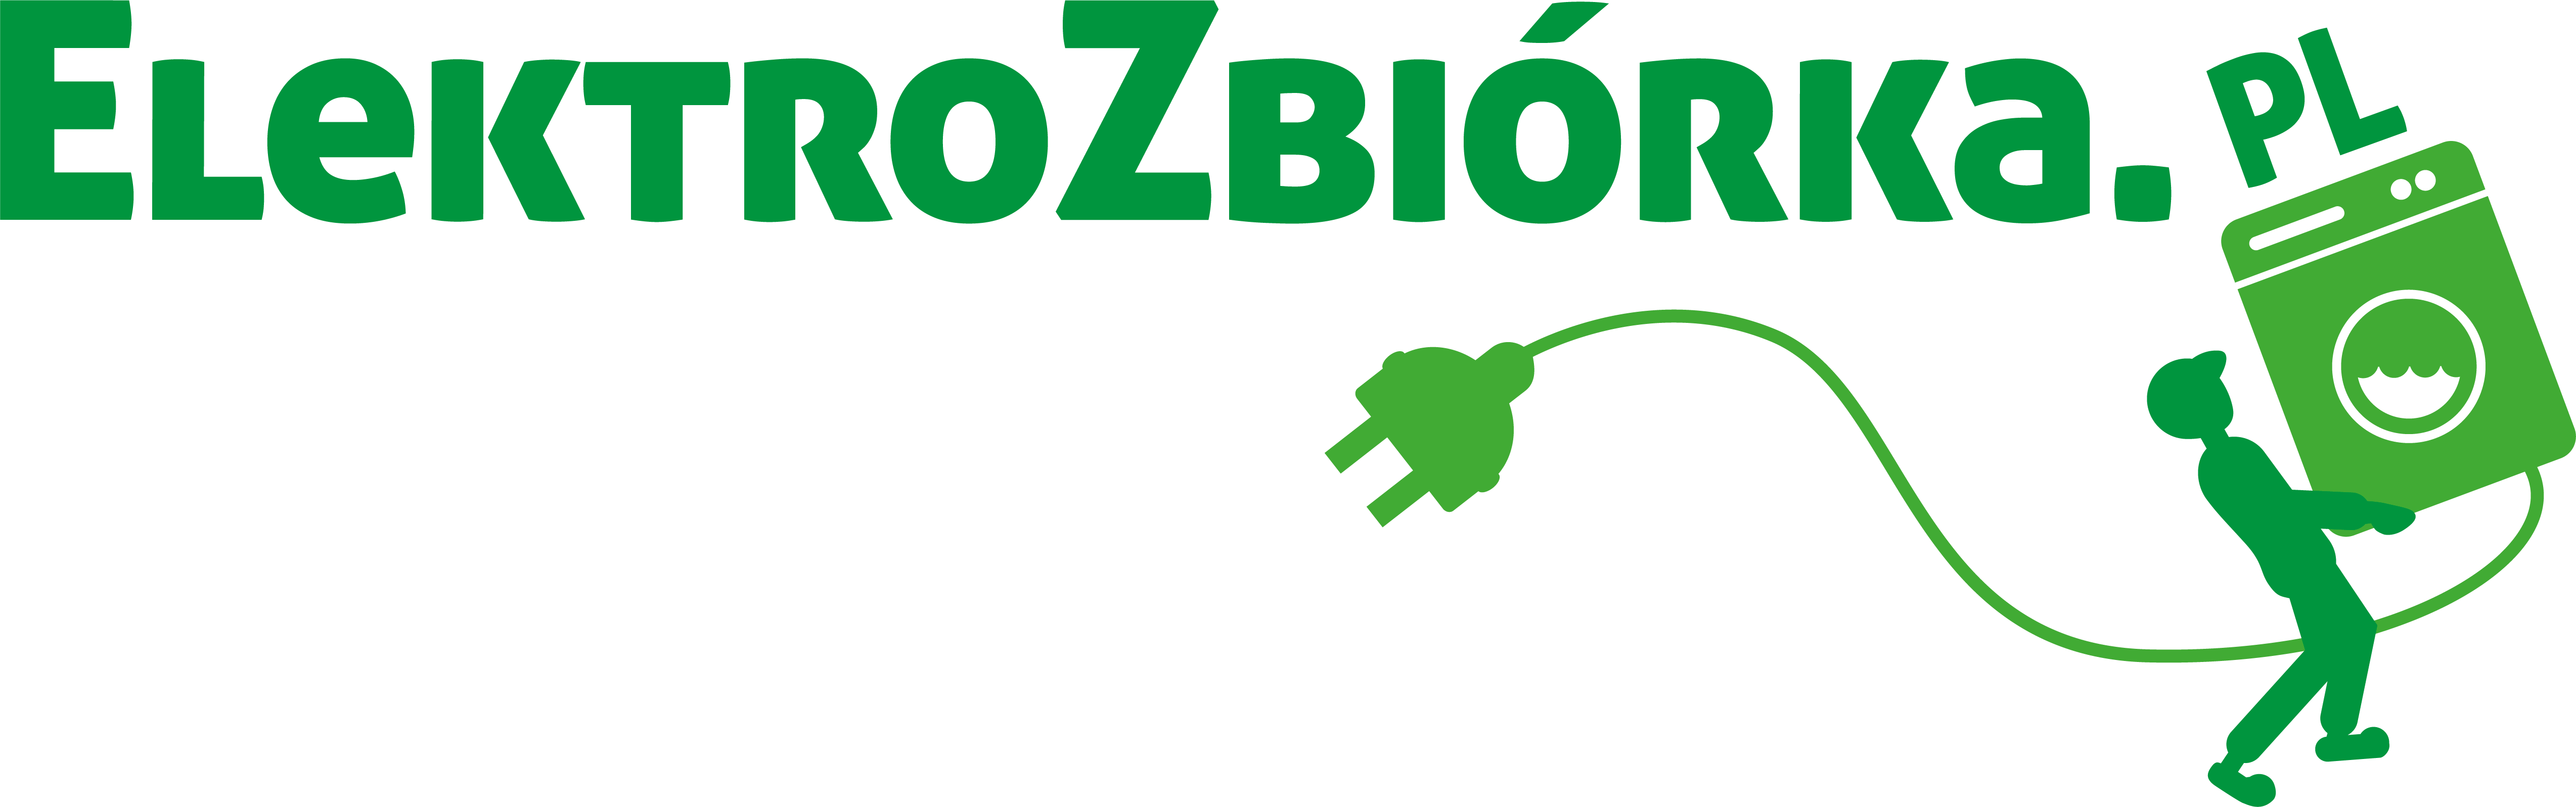 Elektrozbiórka logo